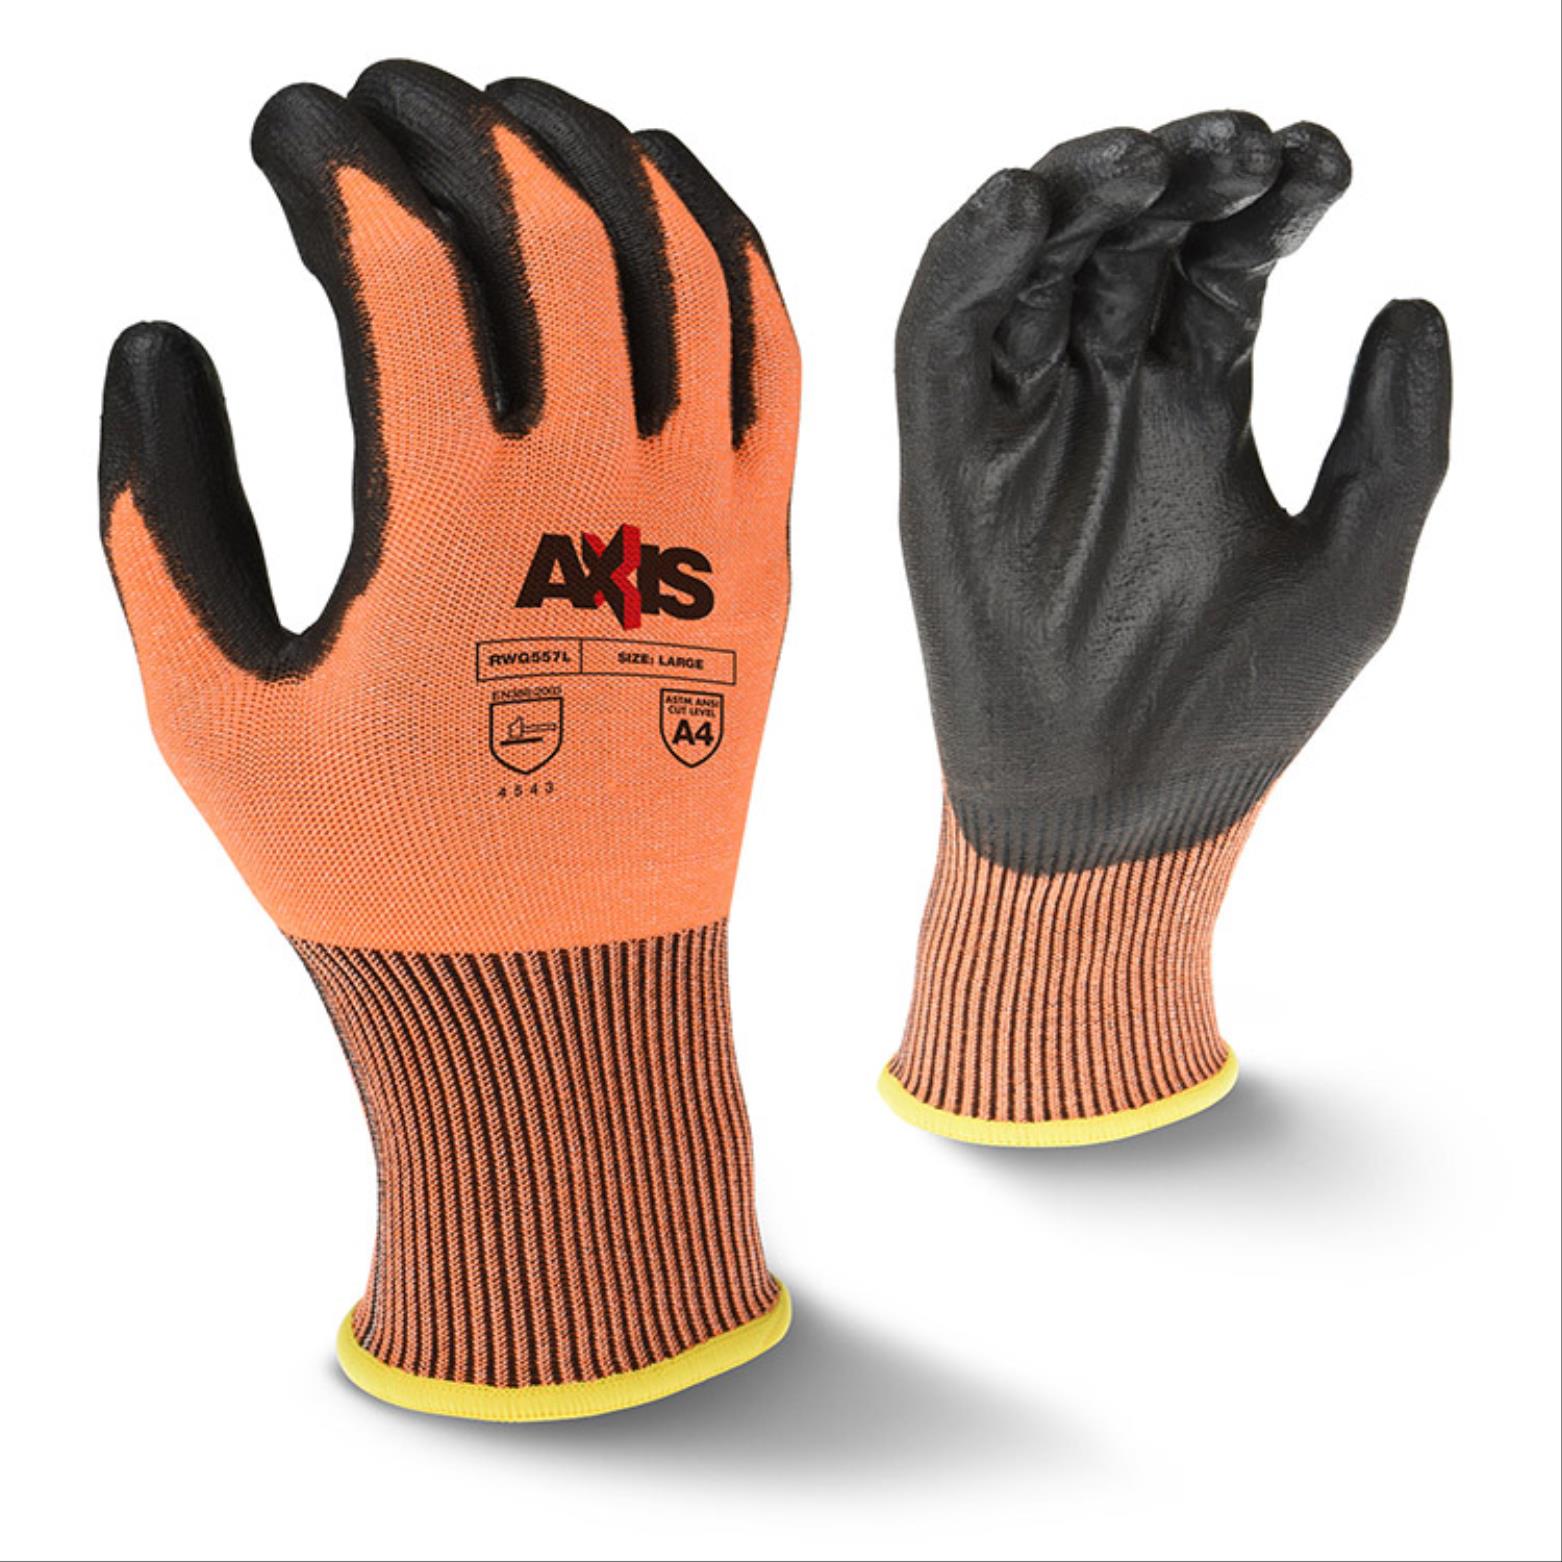 Axis™ High Tenacity Nylon Glove with Fiberglass, Cut Level A4